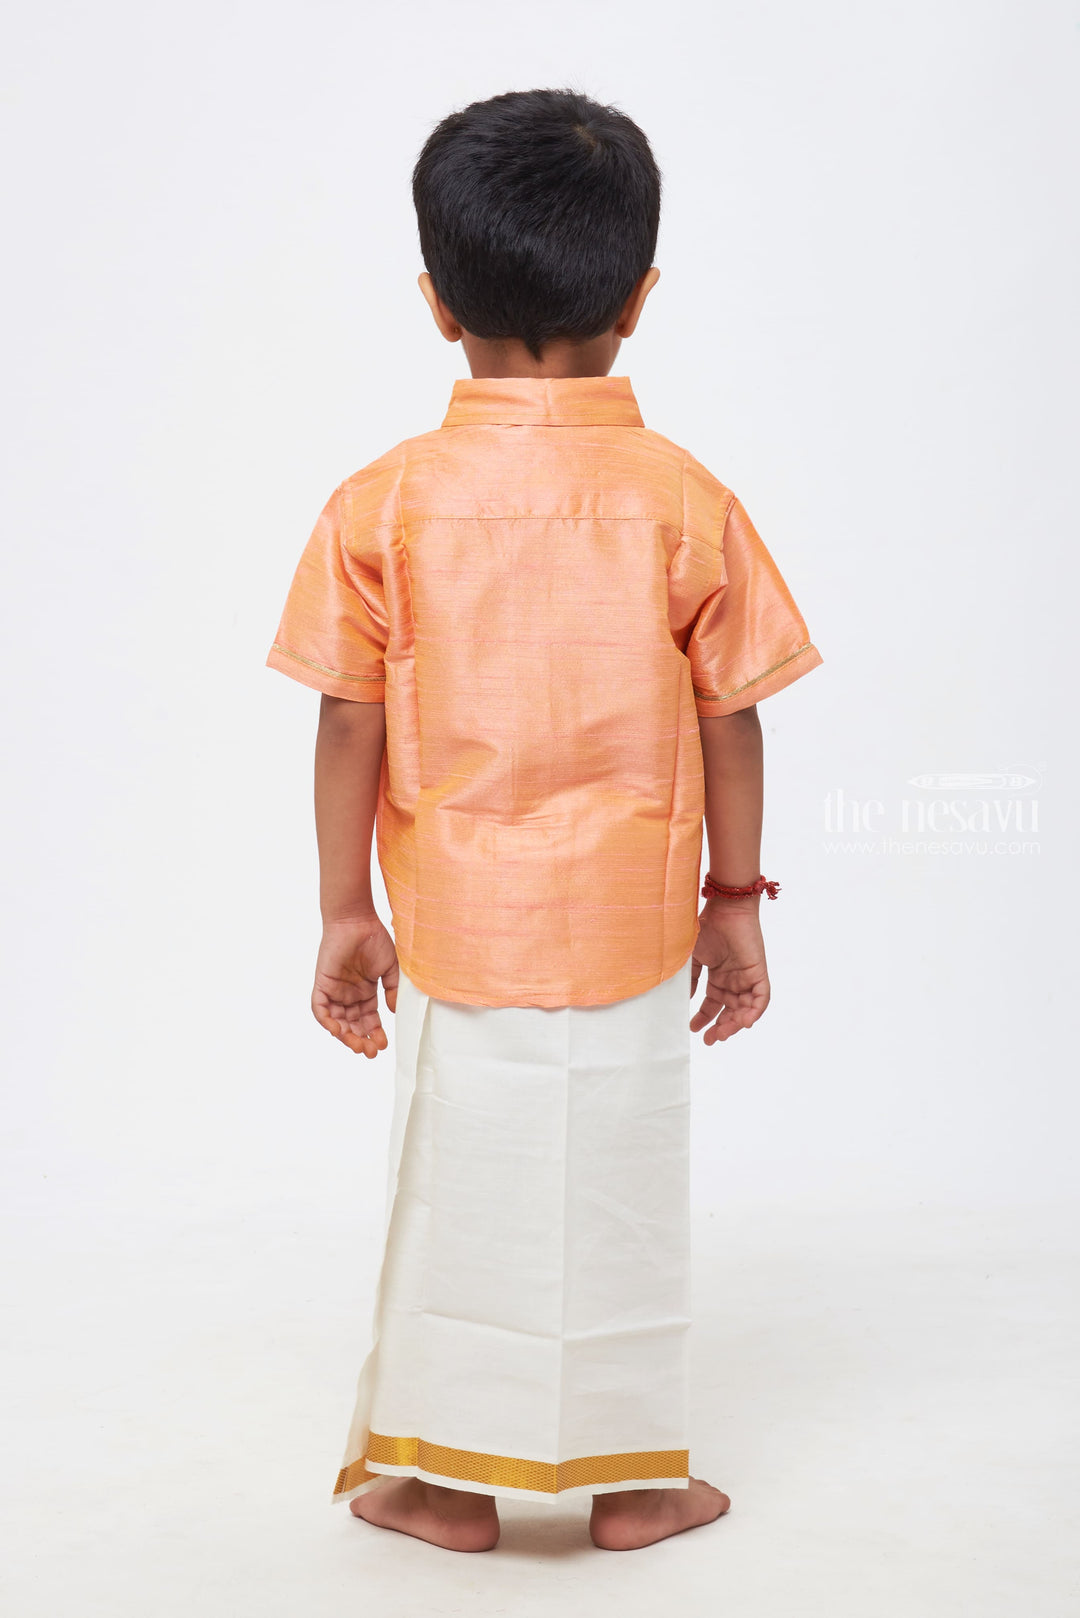 The Nesavu Boys Silk Shirt Elegant Boys Salmon Silk Shirt with Contrasting Detailing: Ideal for Celebratory Events and Traditional Gatherings Nesavu Trendy and Comfortable Boys Silk Shirts | Stylish Kids Wear | The Nesavu